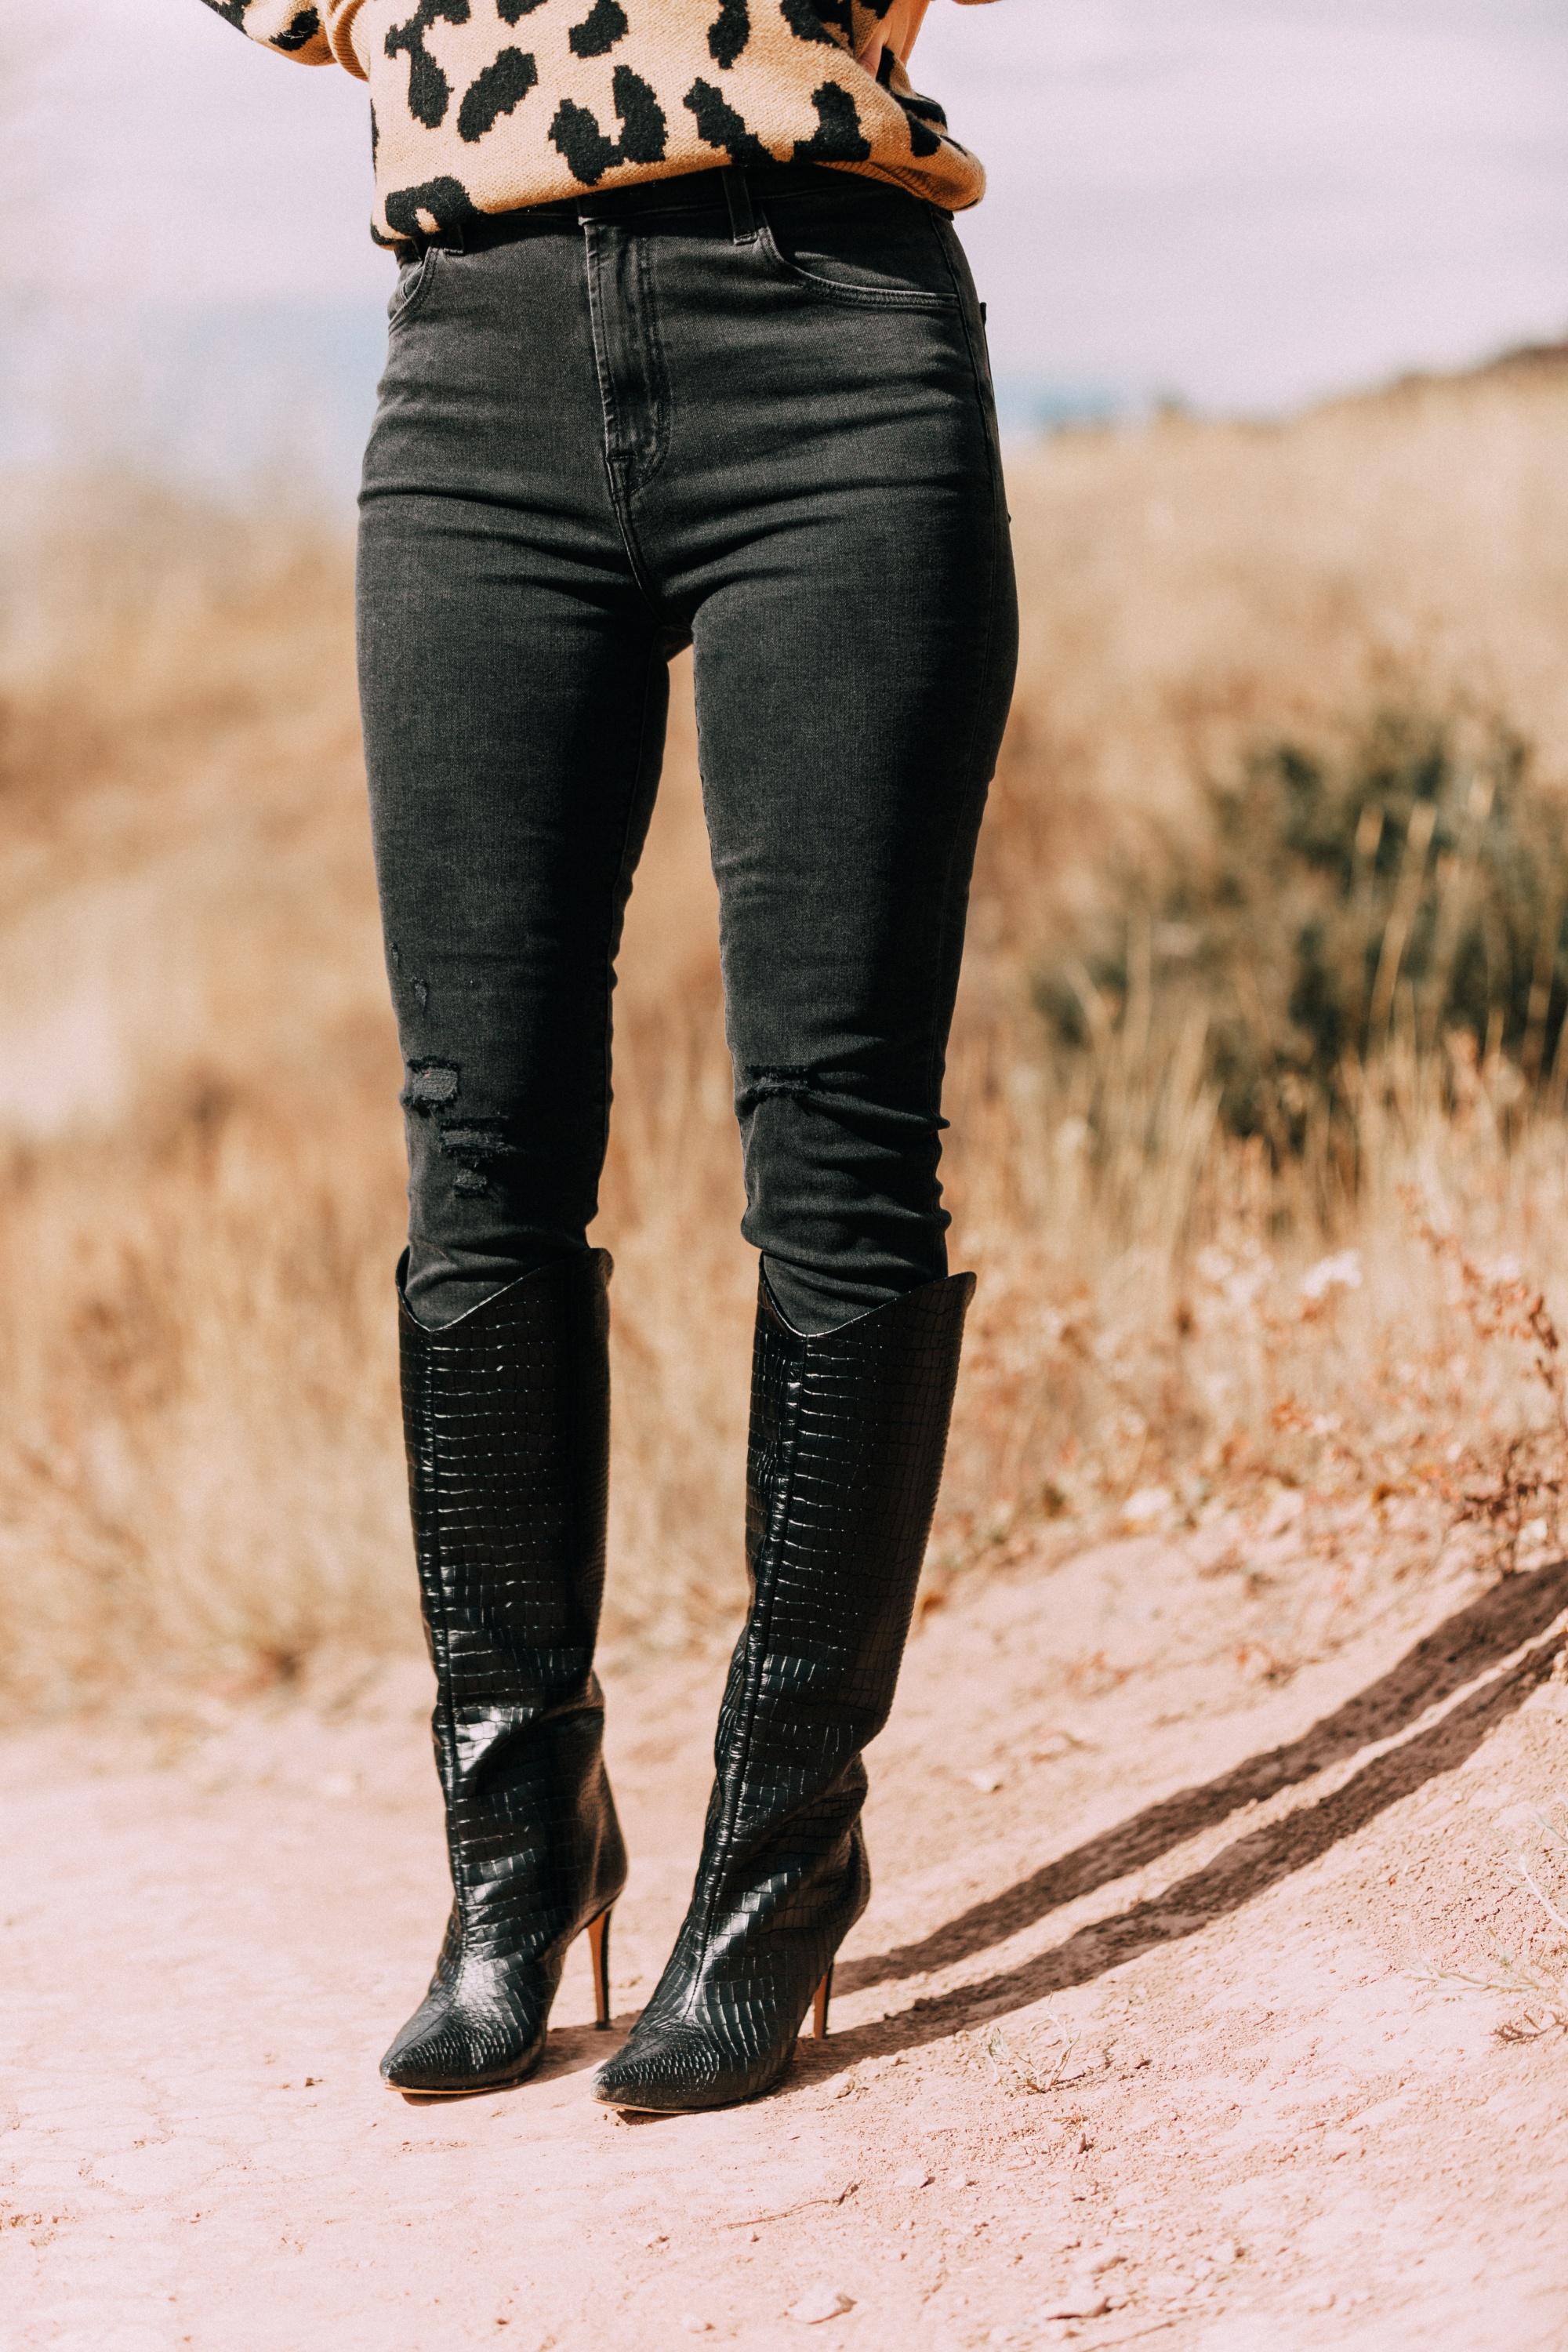 Schutz Maryana black Snake embossed heeled stiletto knee high Boots with Madeleine Thompson tan leopard print sweater